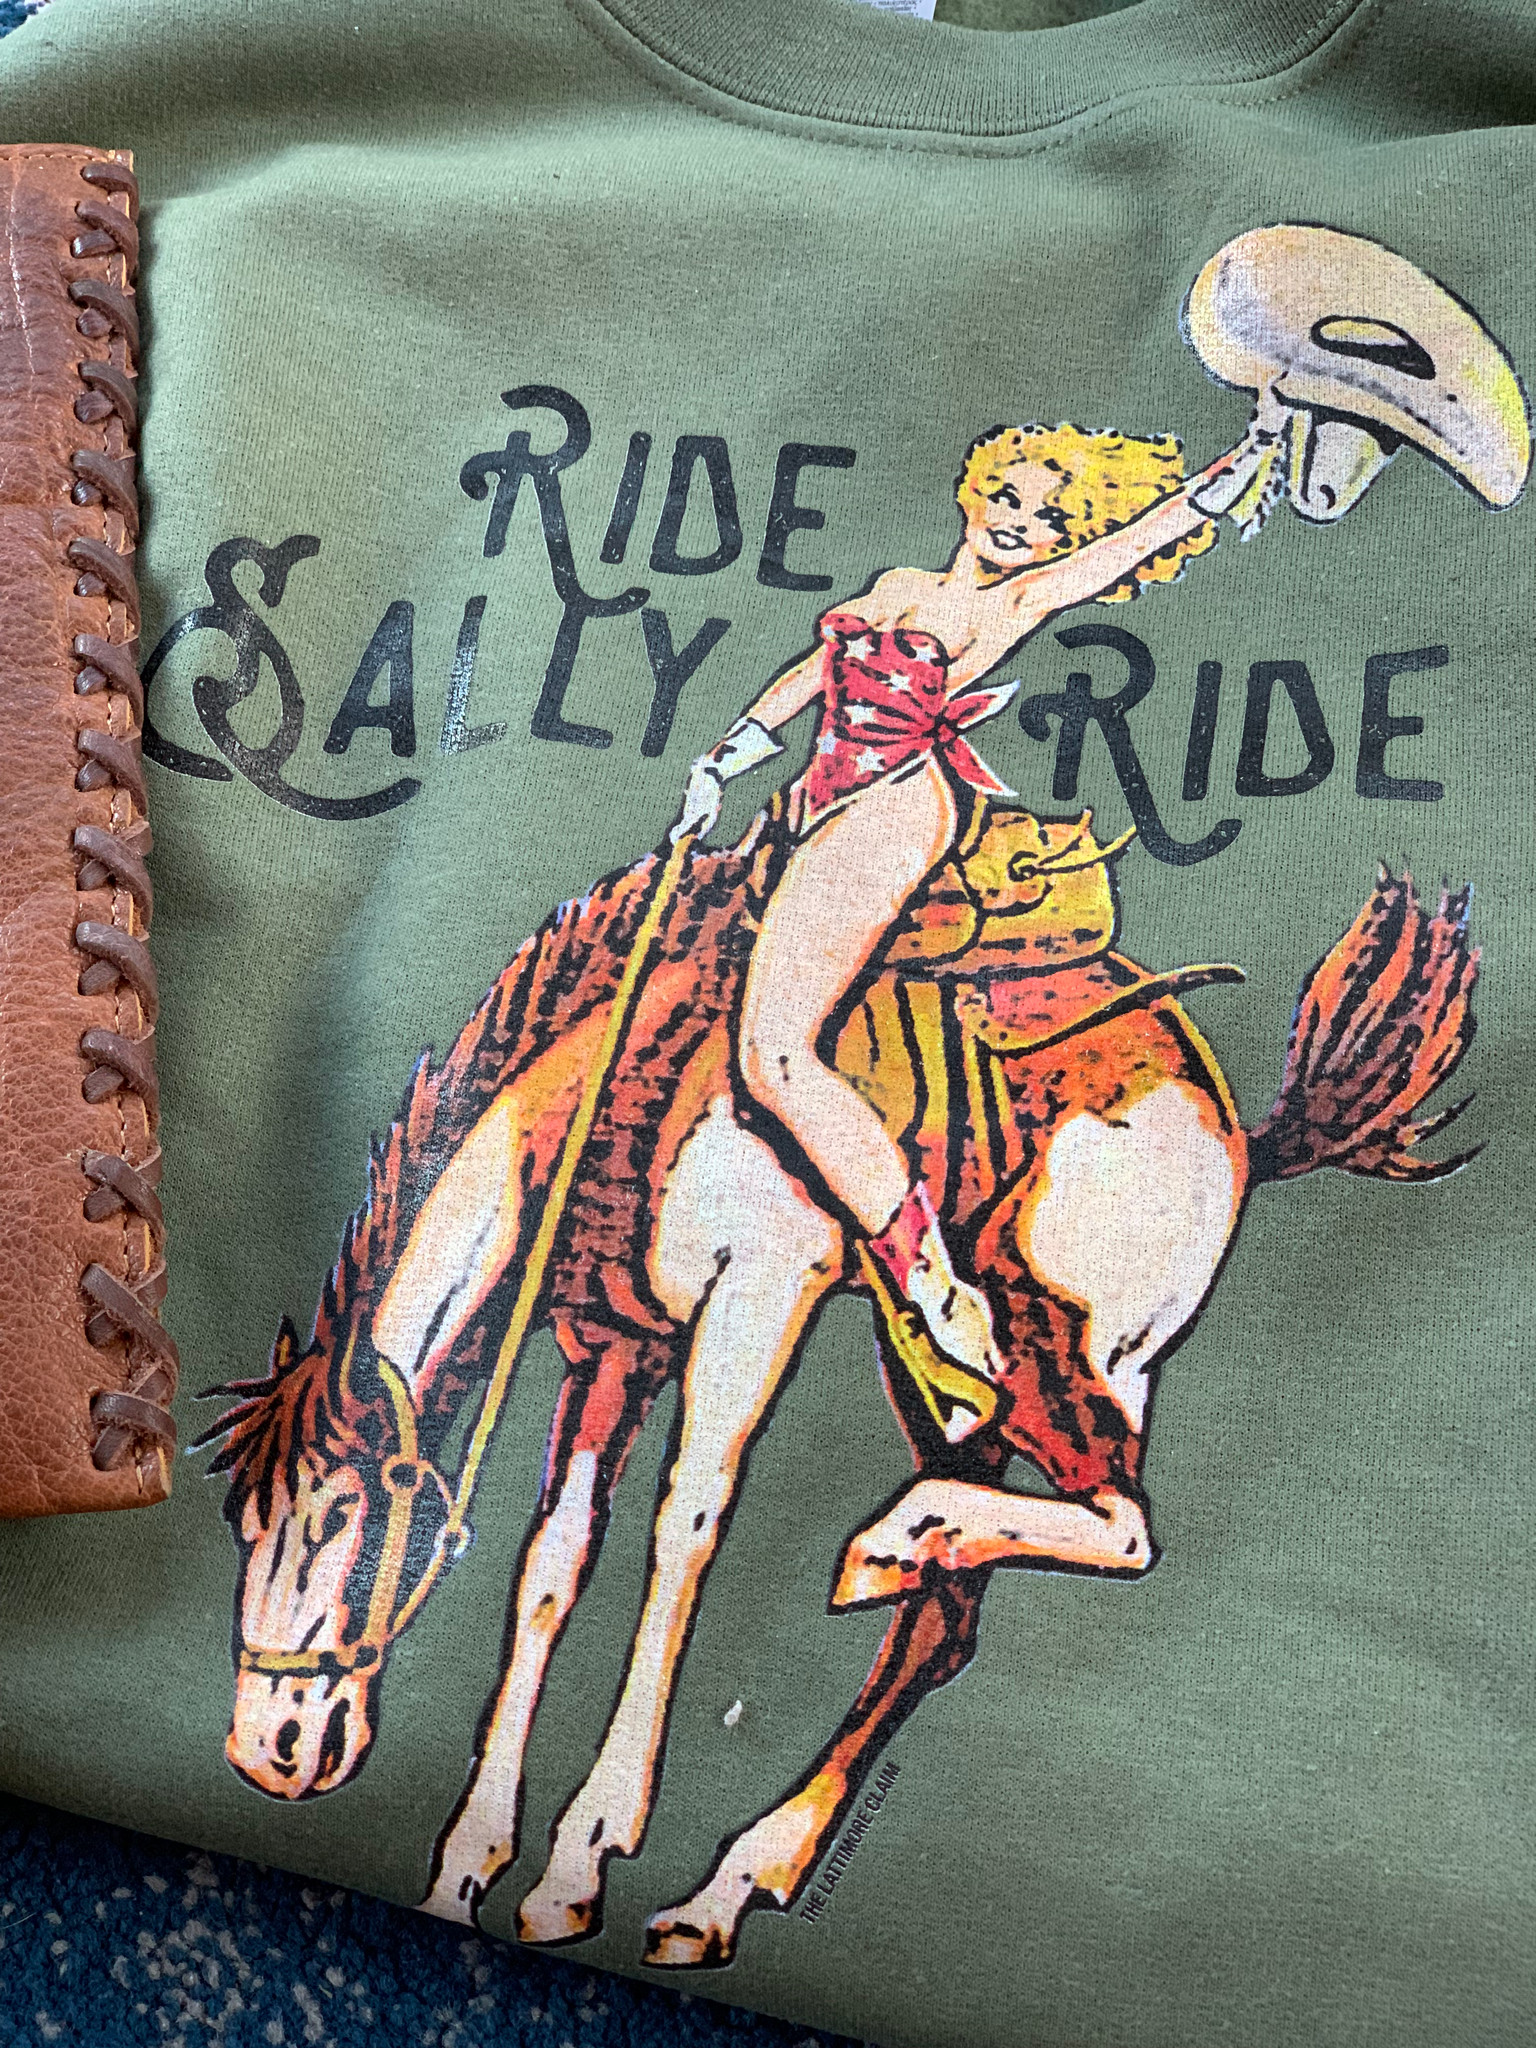 Sally, The Racer  Who Shirt Company